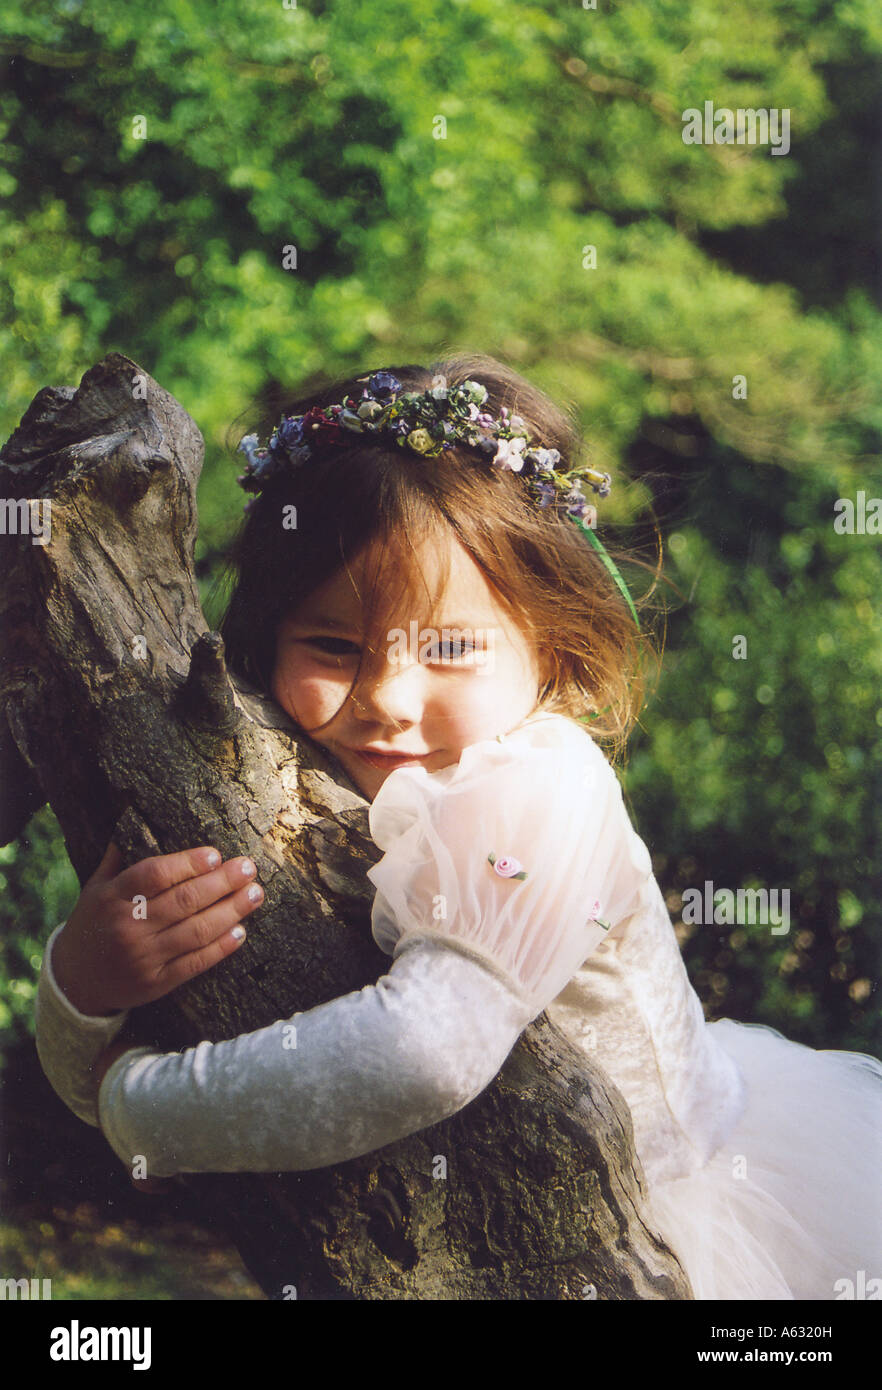 cute child hugging a tree Stock Photo